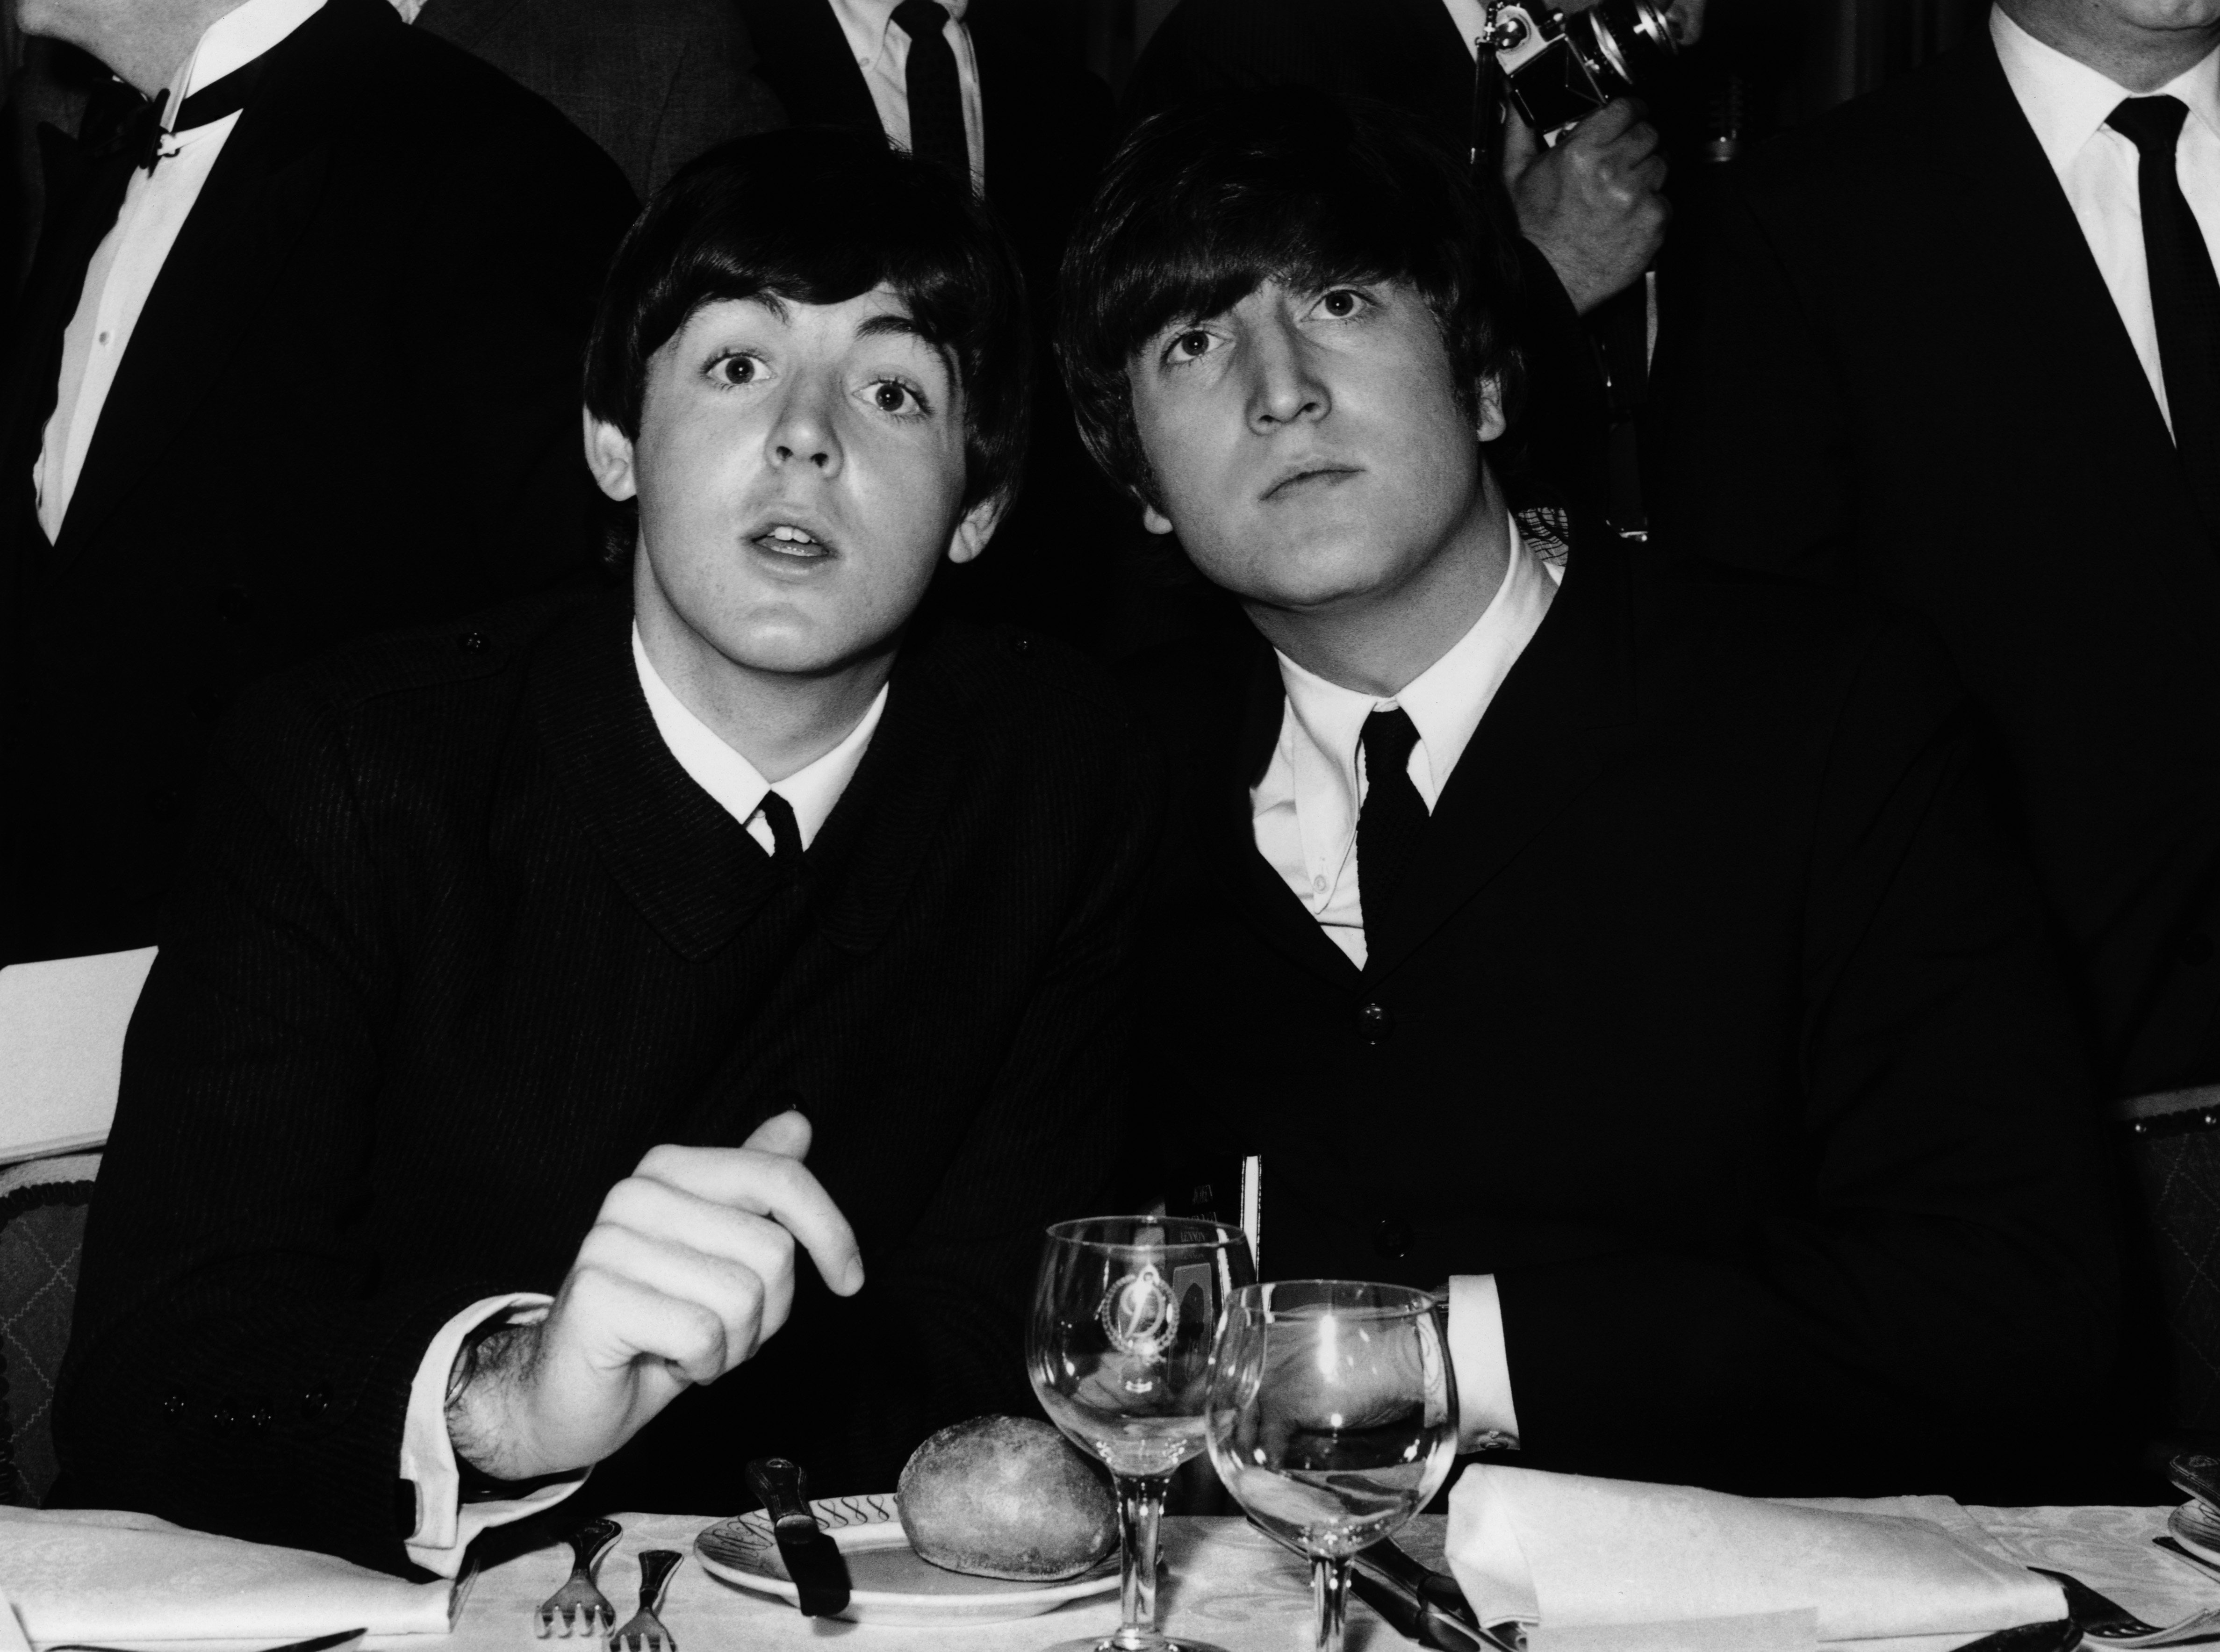 The Beatles members Paul McCartney (left) and John Lennon at the Variety Club Showbusiness Awards